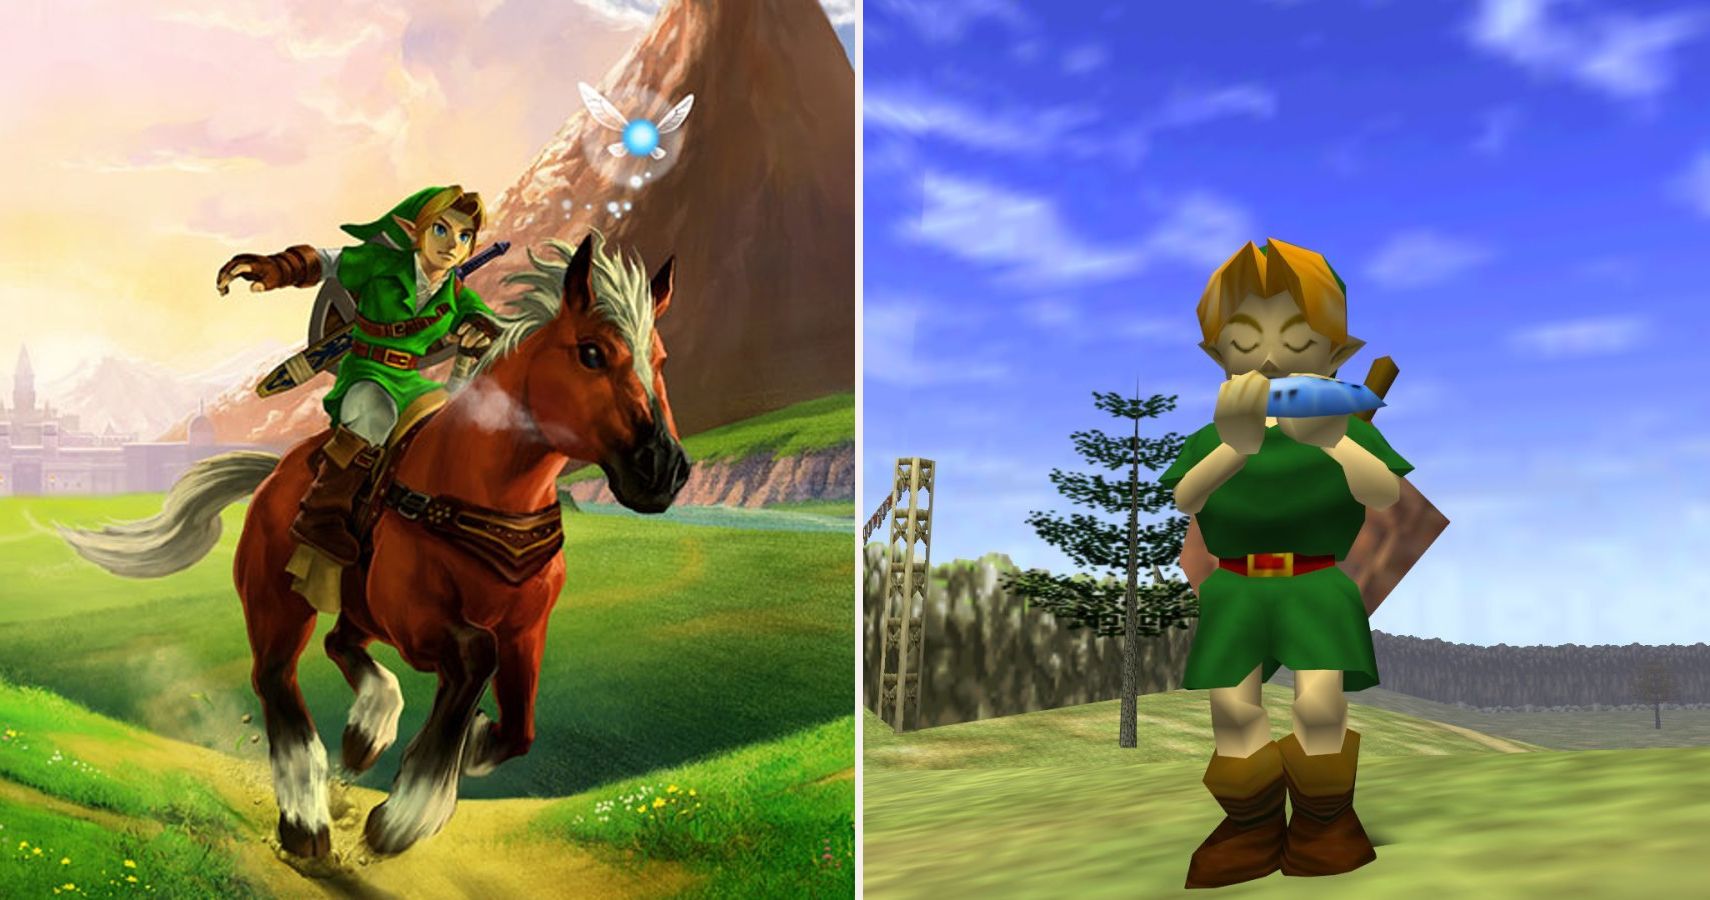 Zelda: Ocarina Of Time - Every Ocarina Song, Ranked From 'Worst